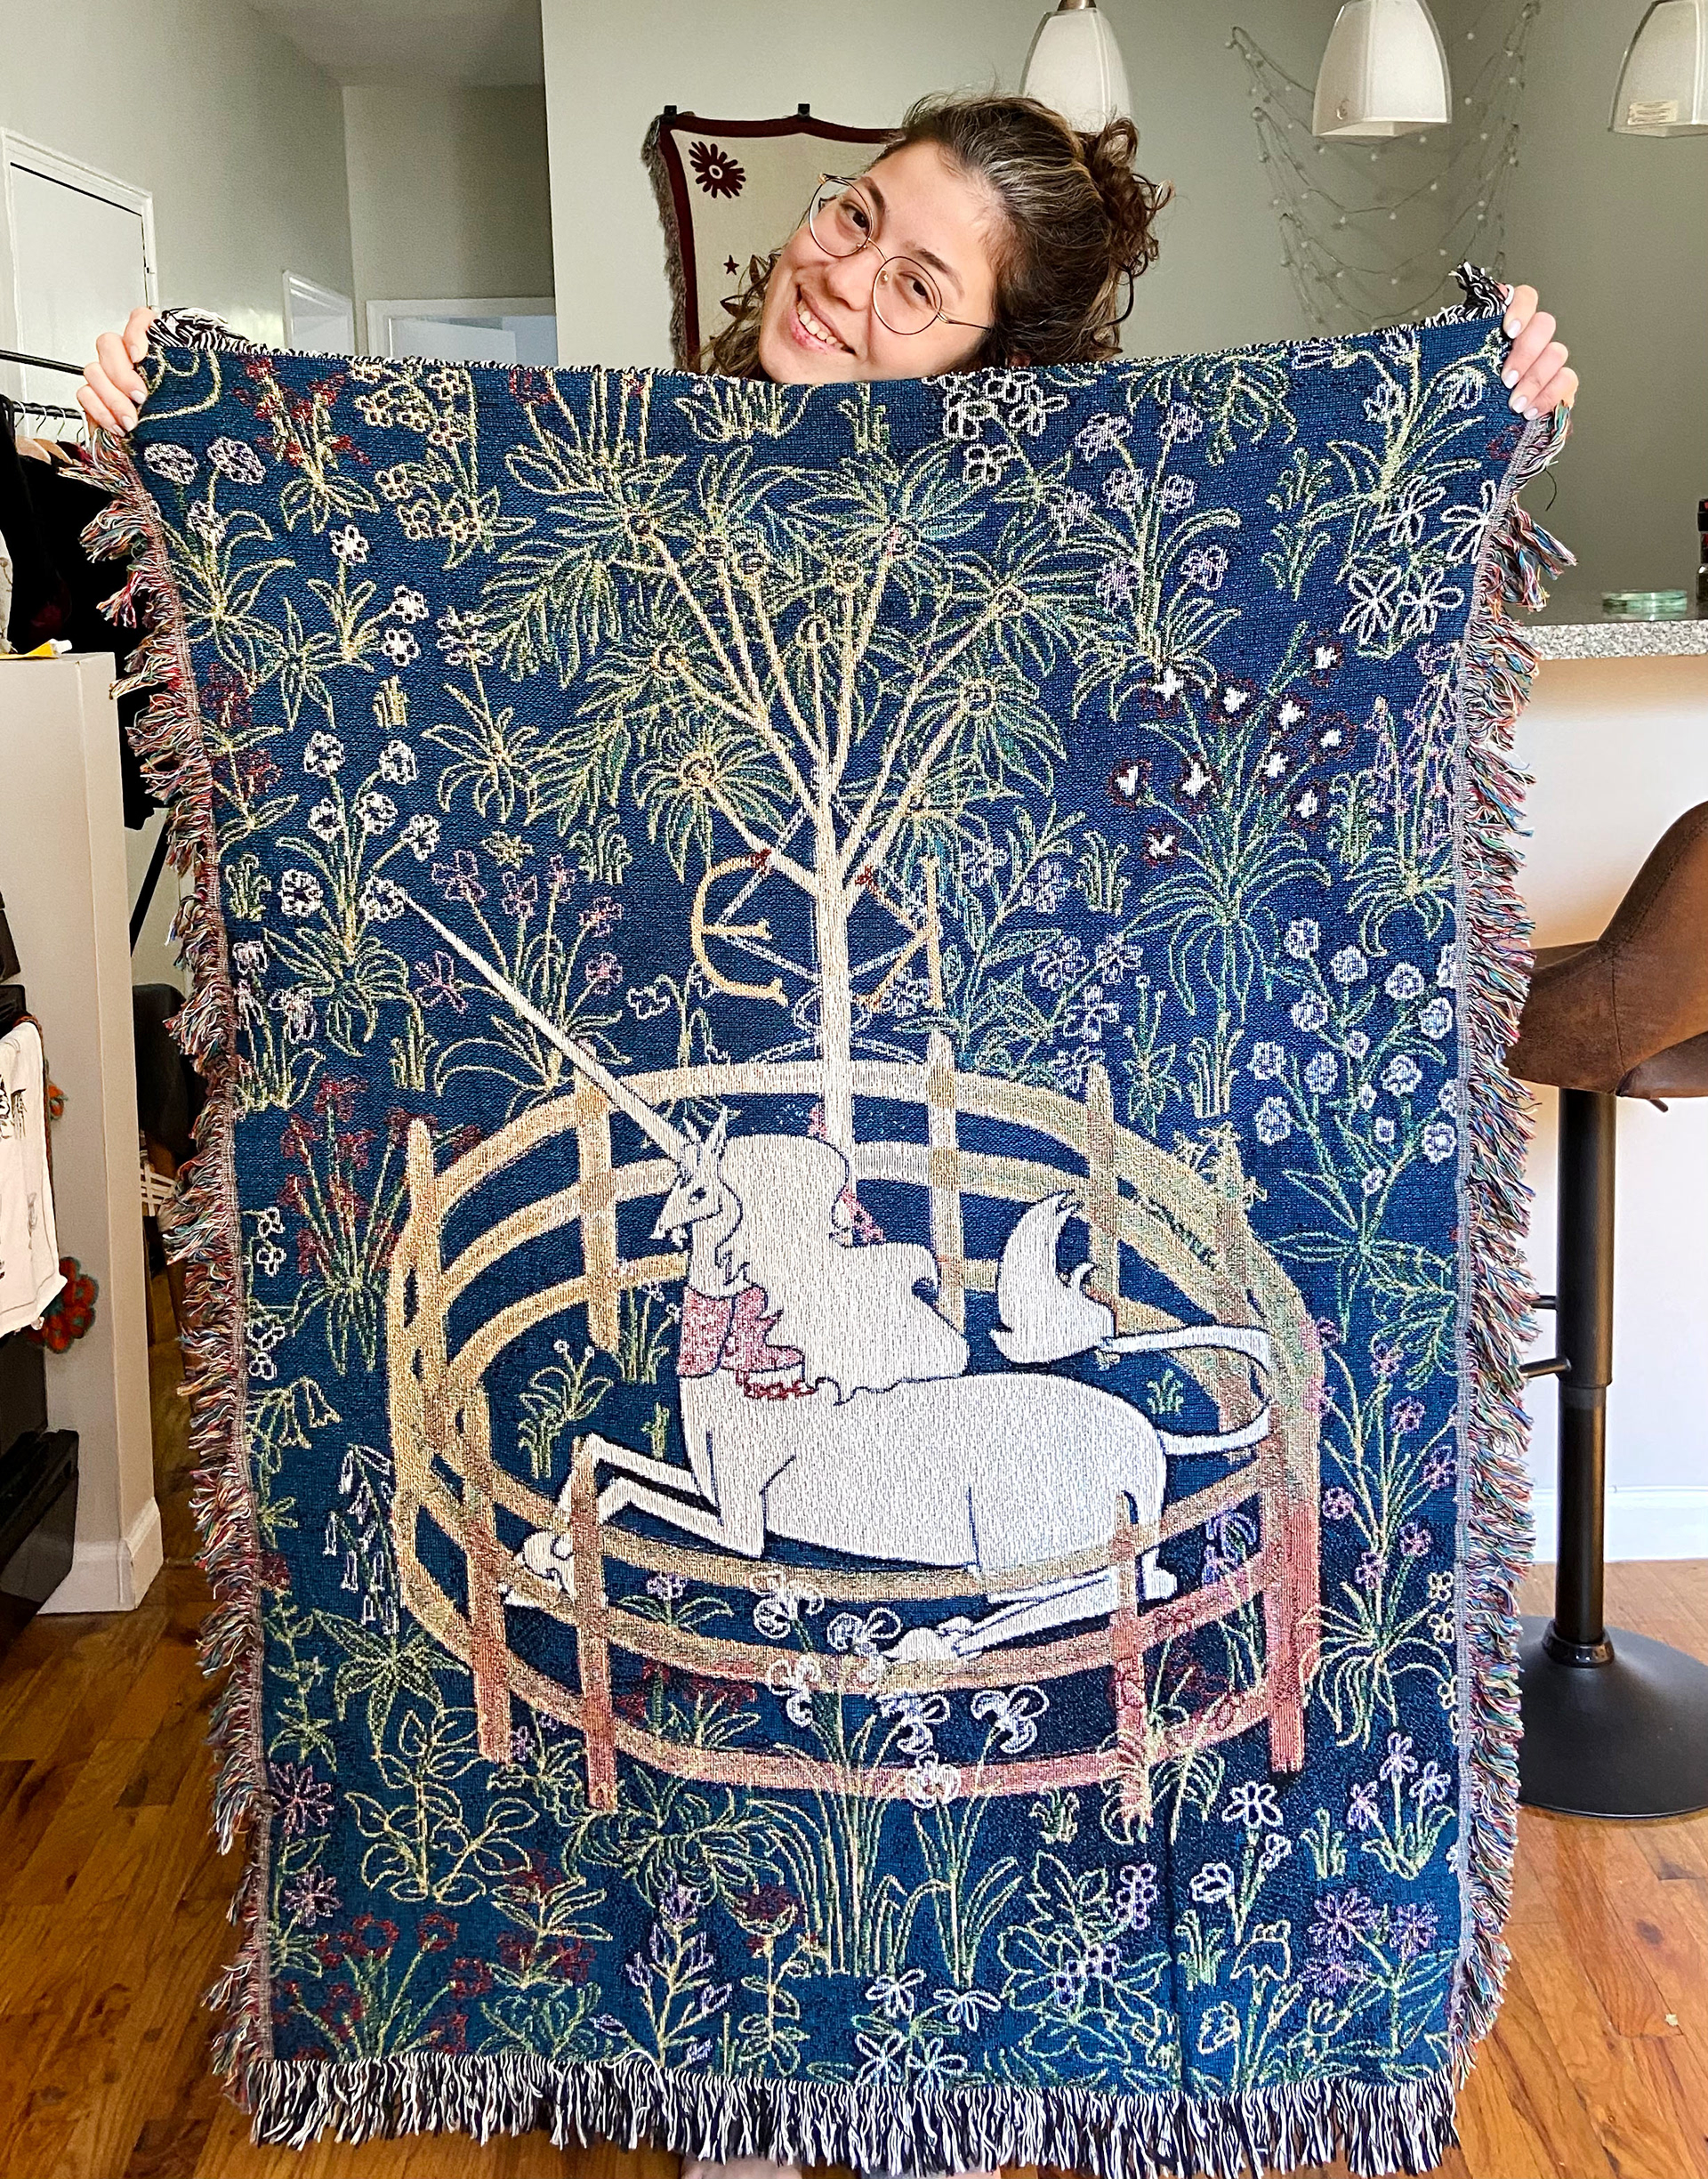 Edanur Kuntman holding her own unicorn tapestry.